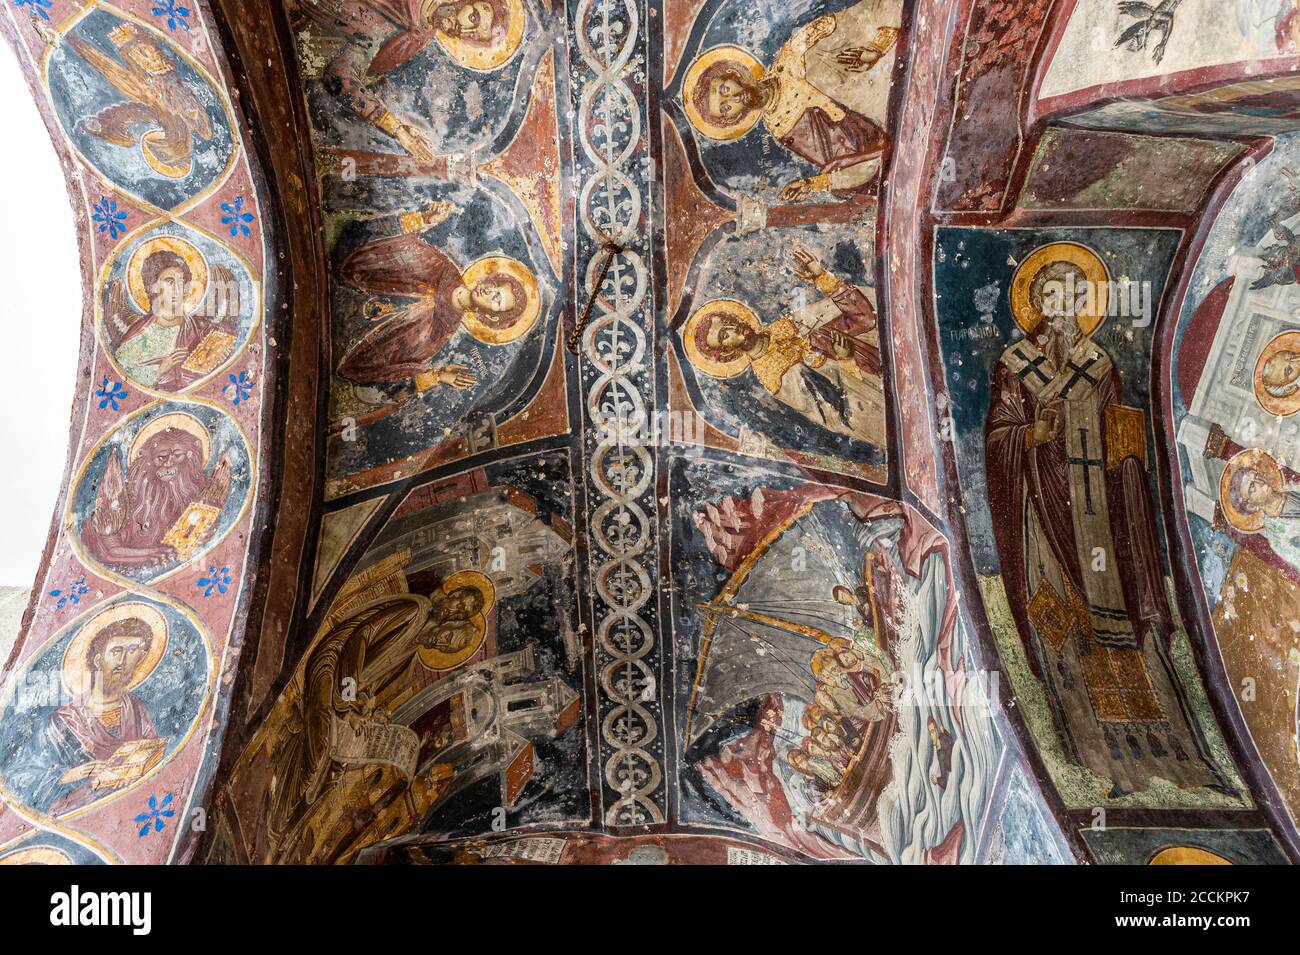 Greece, South Aegean, Patmos, Ceiling frescoes in Monastery of Saint John the Theologian Stock Photo